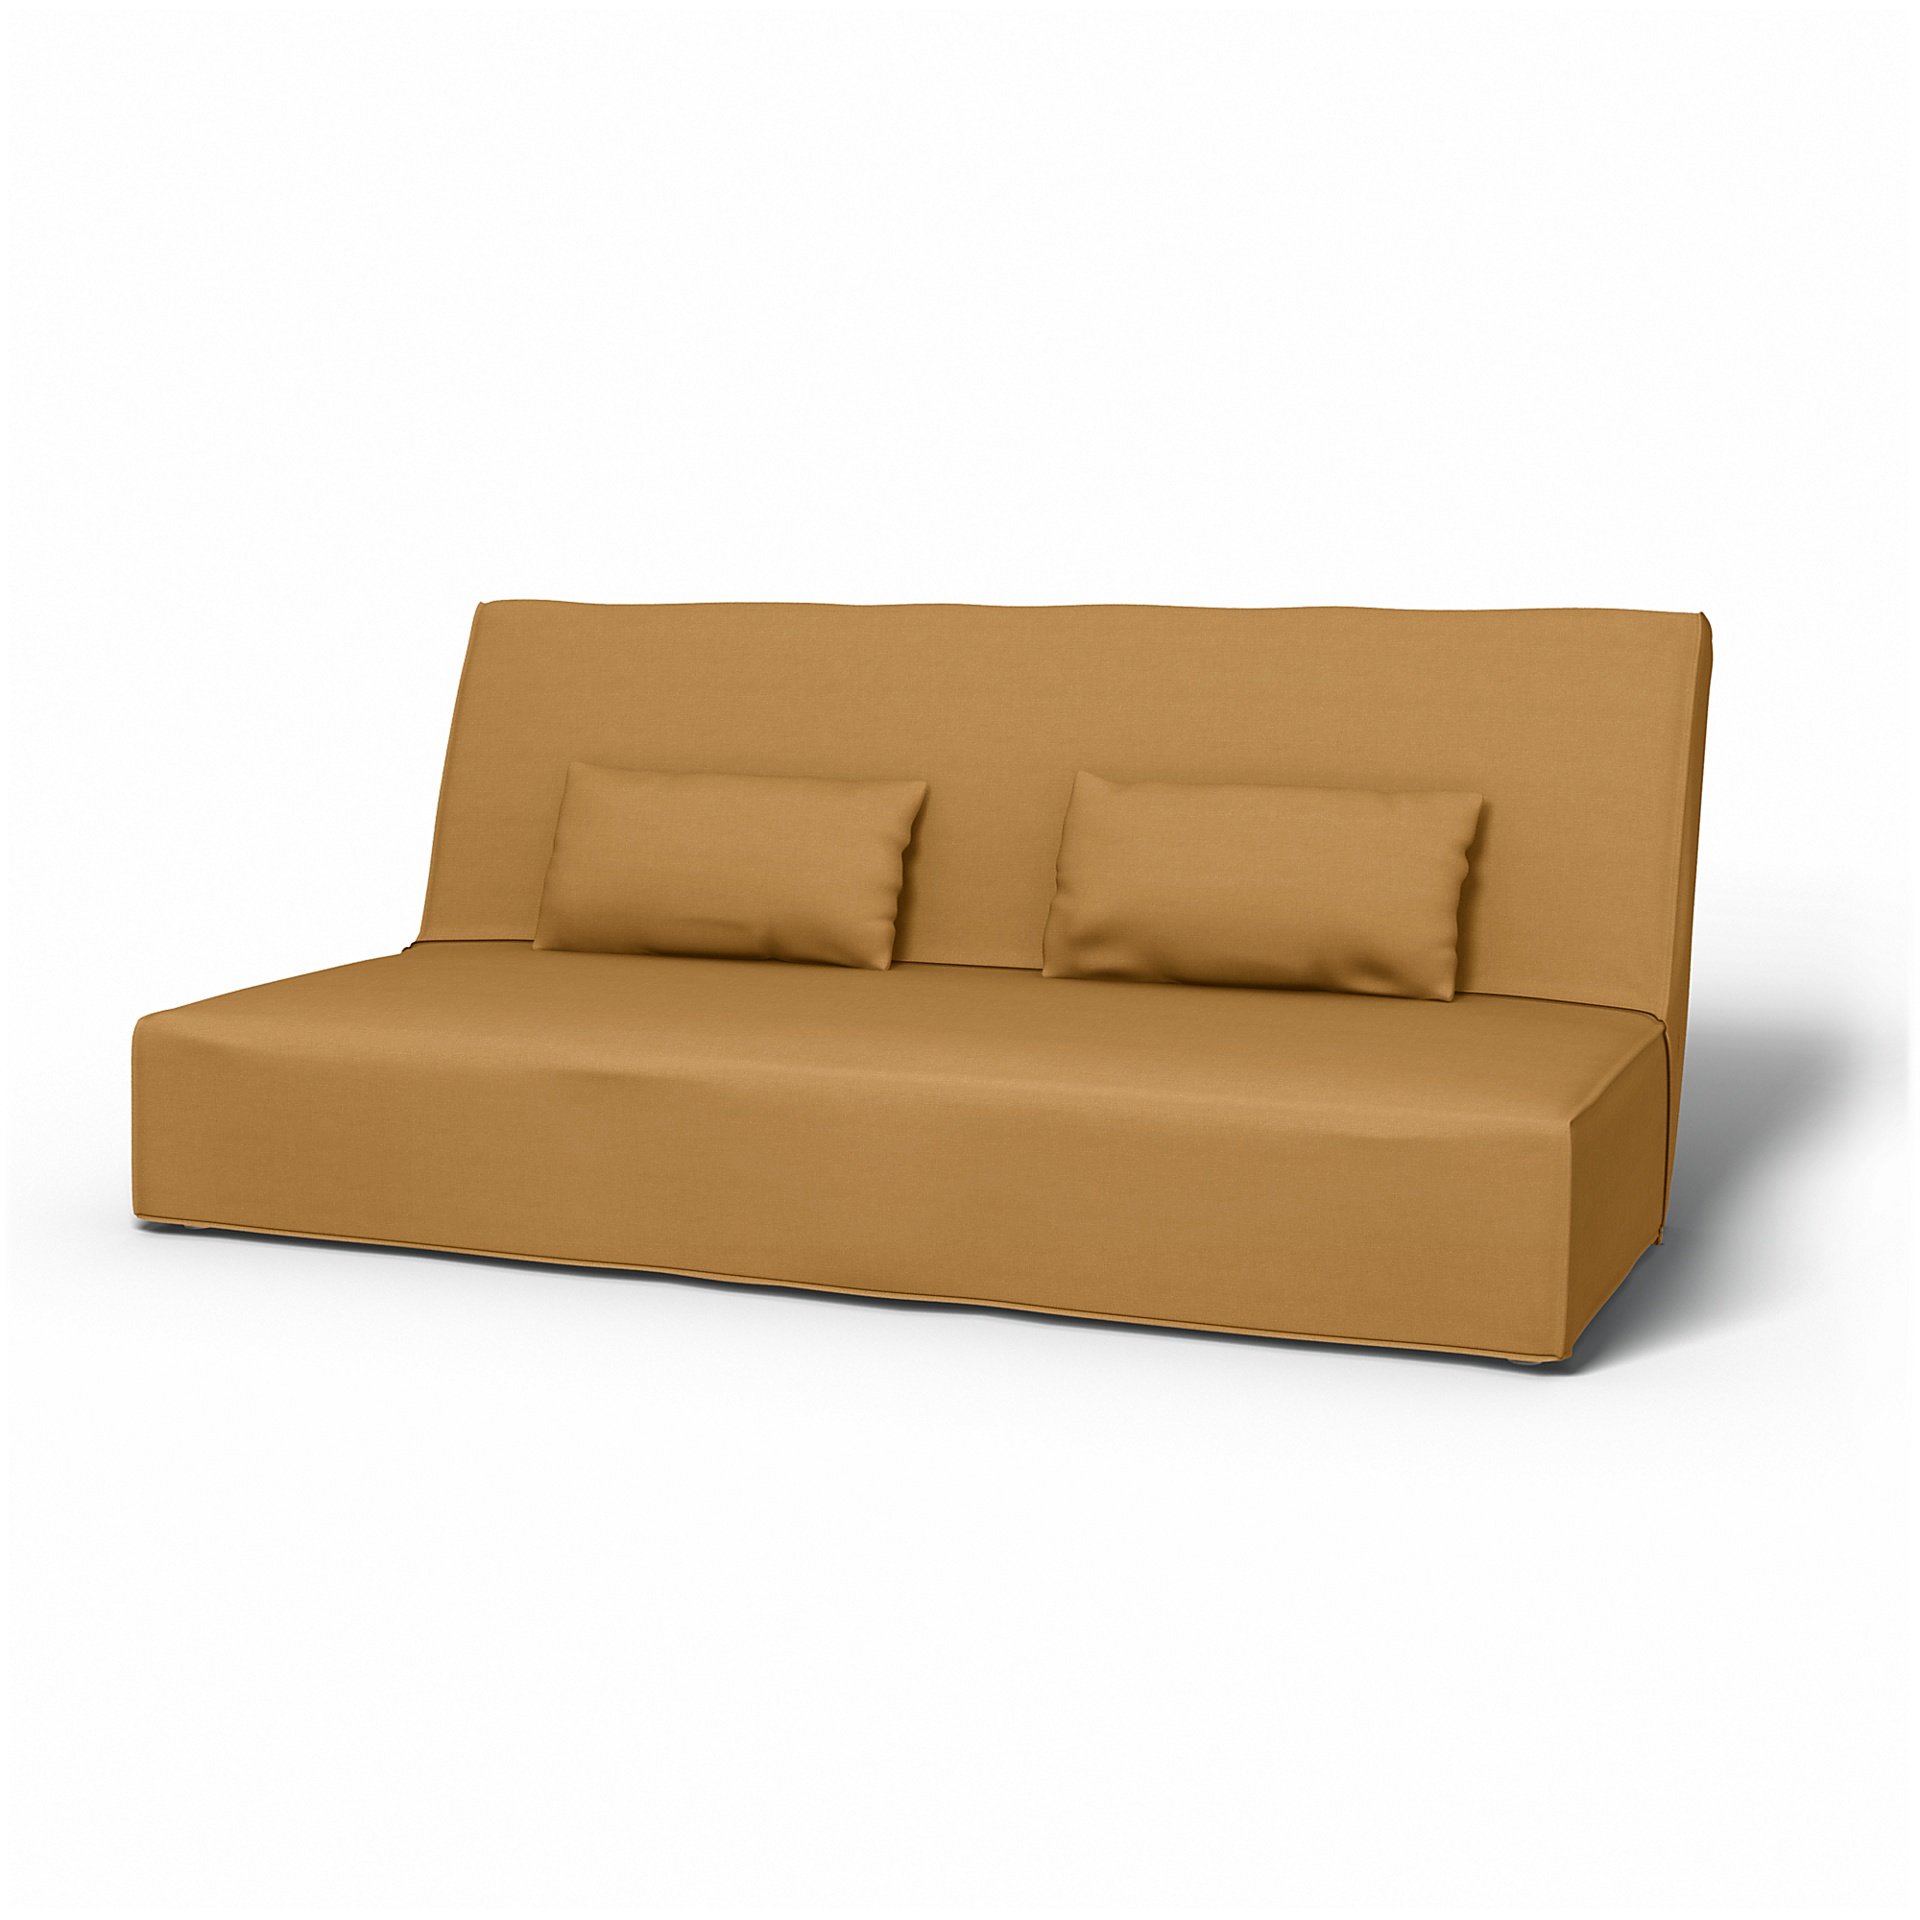 IKEA - Beddinge Sofa Bed Cover, Mustard, Linen - Bemz